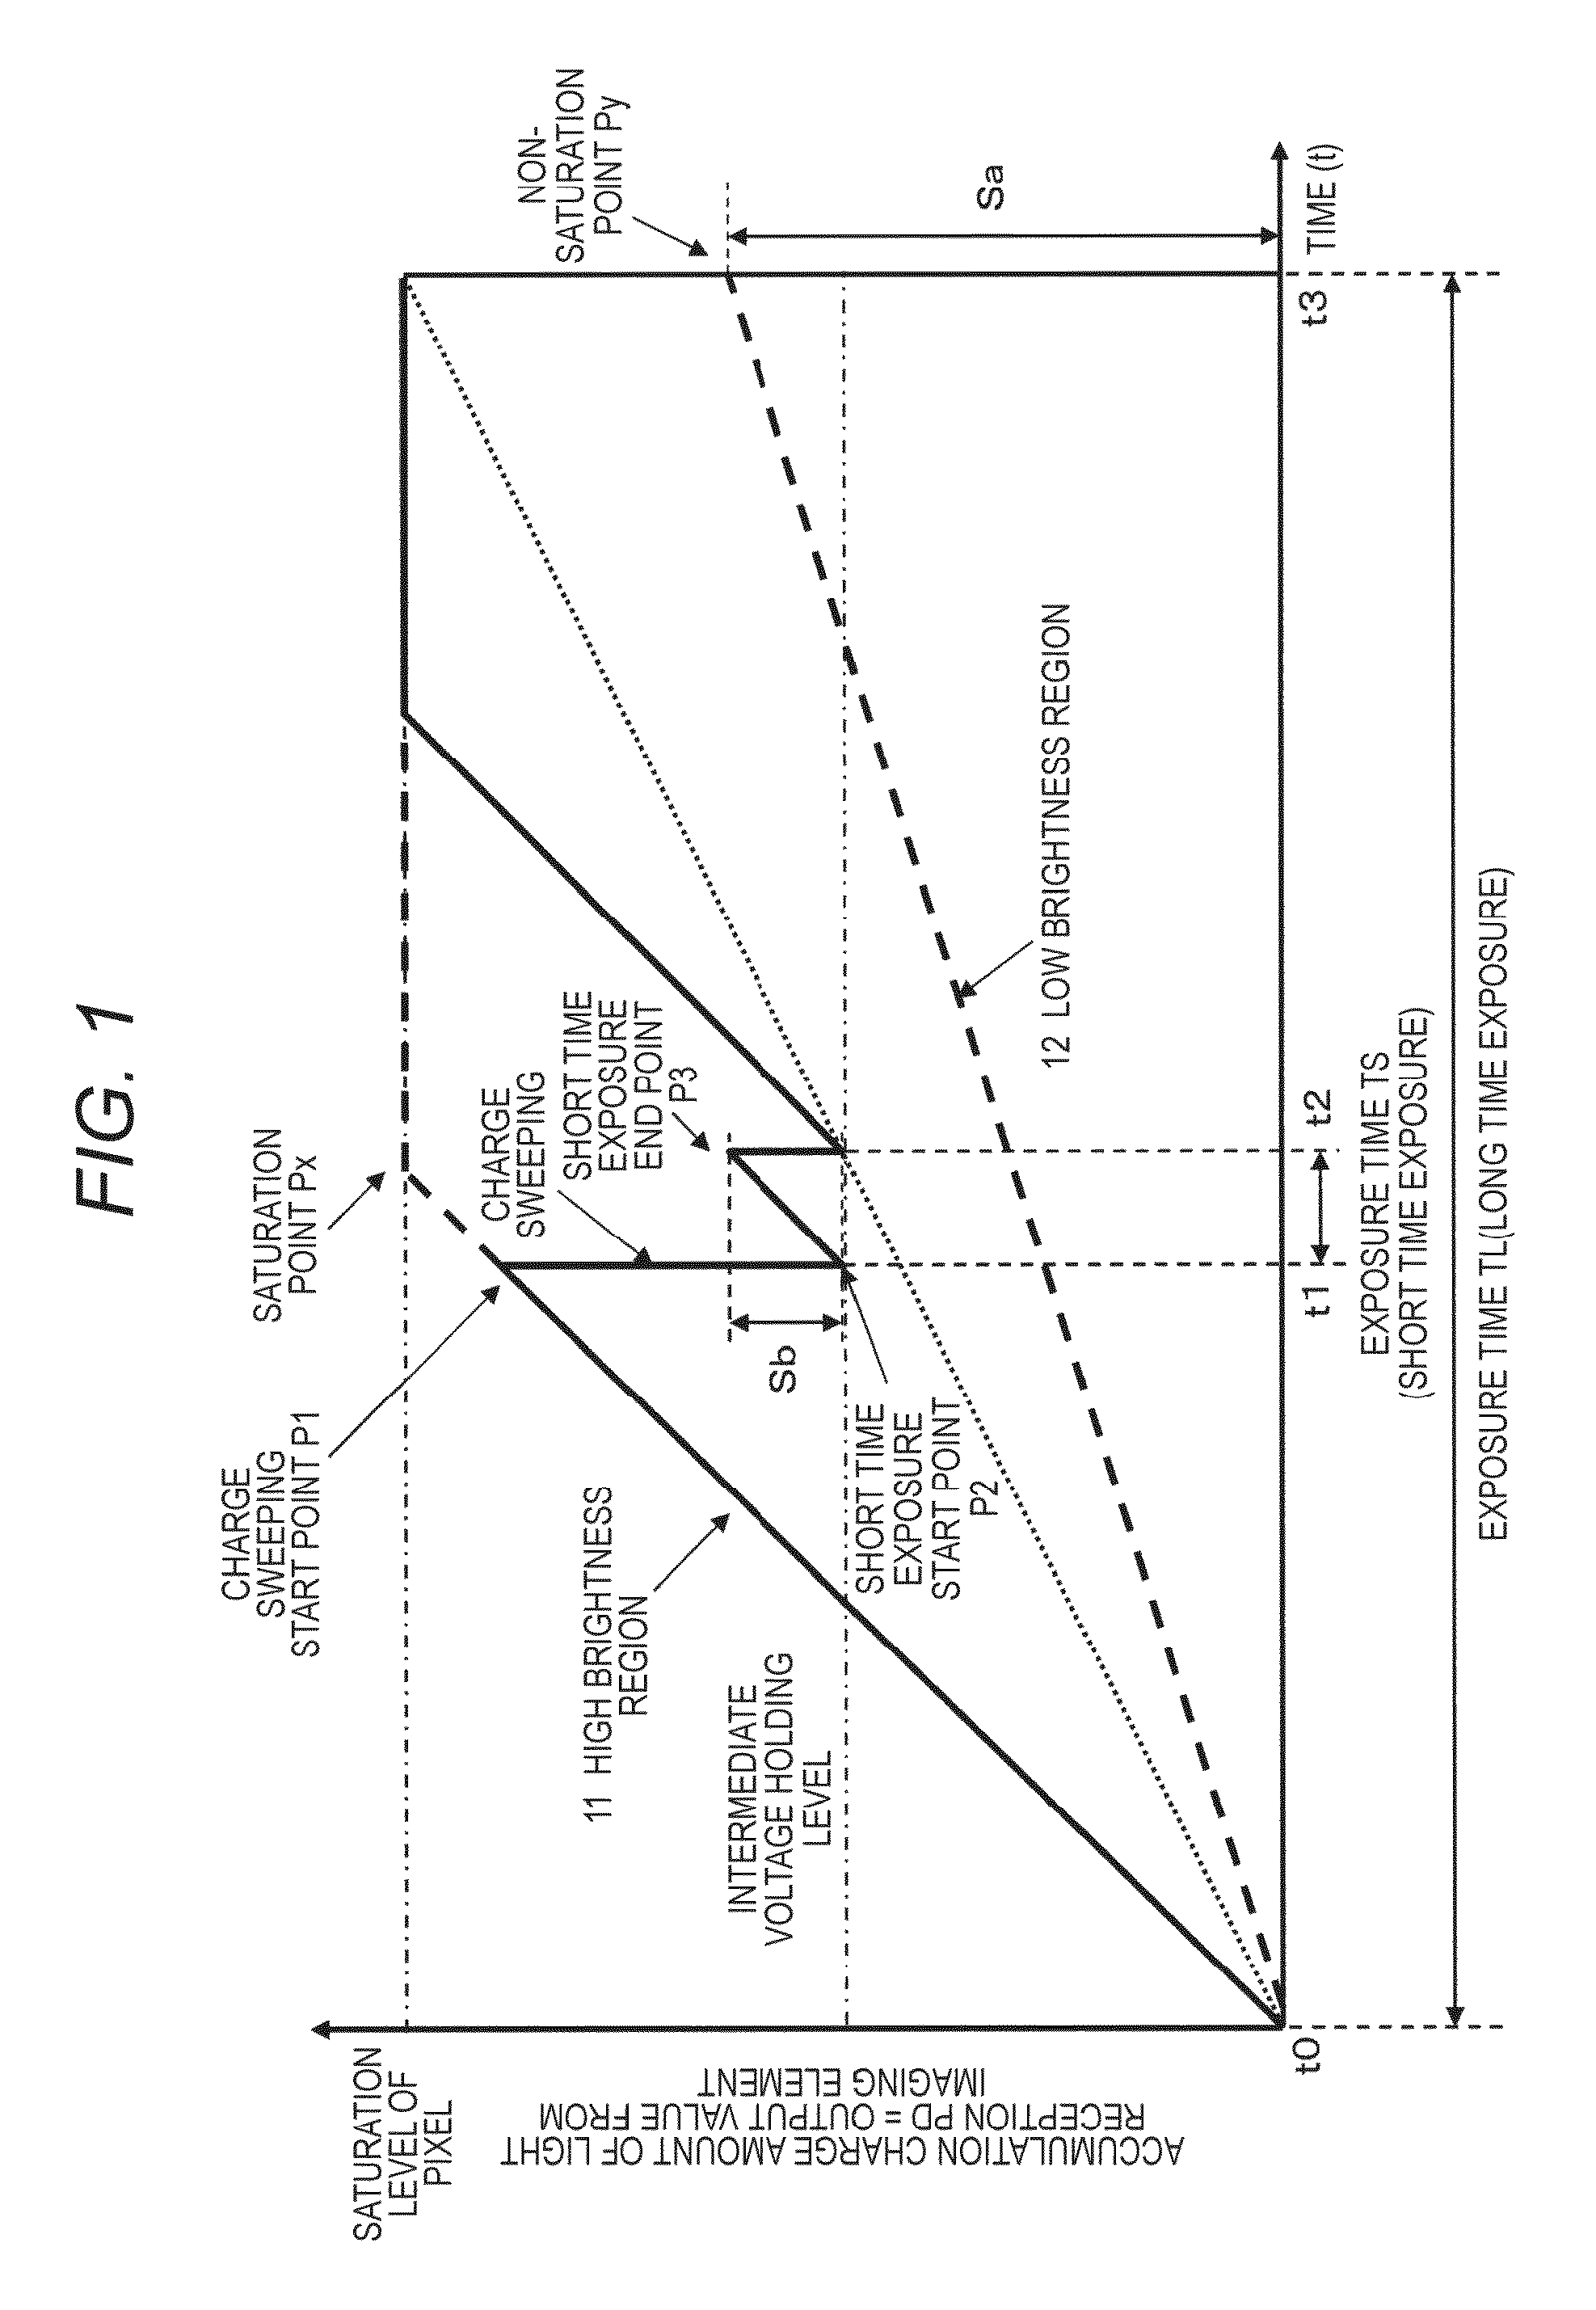 Imaging apparatus, signal processing method, and program